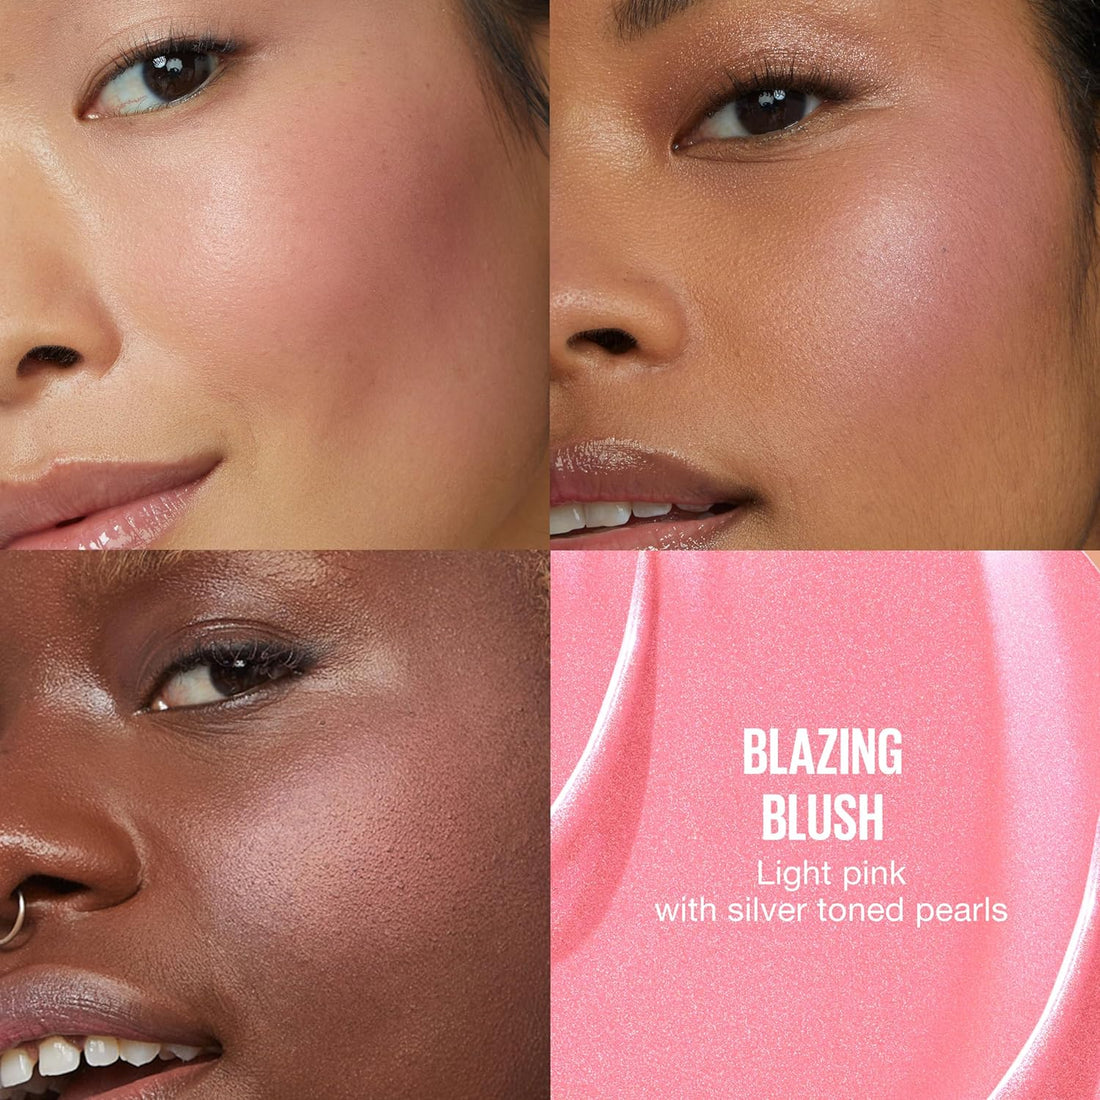 Sunkisser Multi-Use Liquid Blush and Bronzer, Blendable, Longwear, Glowy Make Up, Blazing Blush, 1 Count